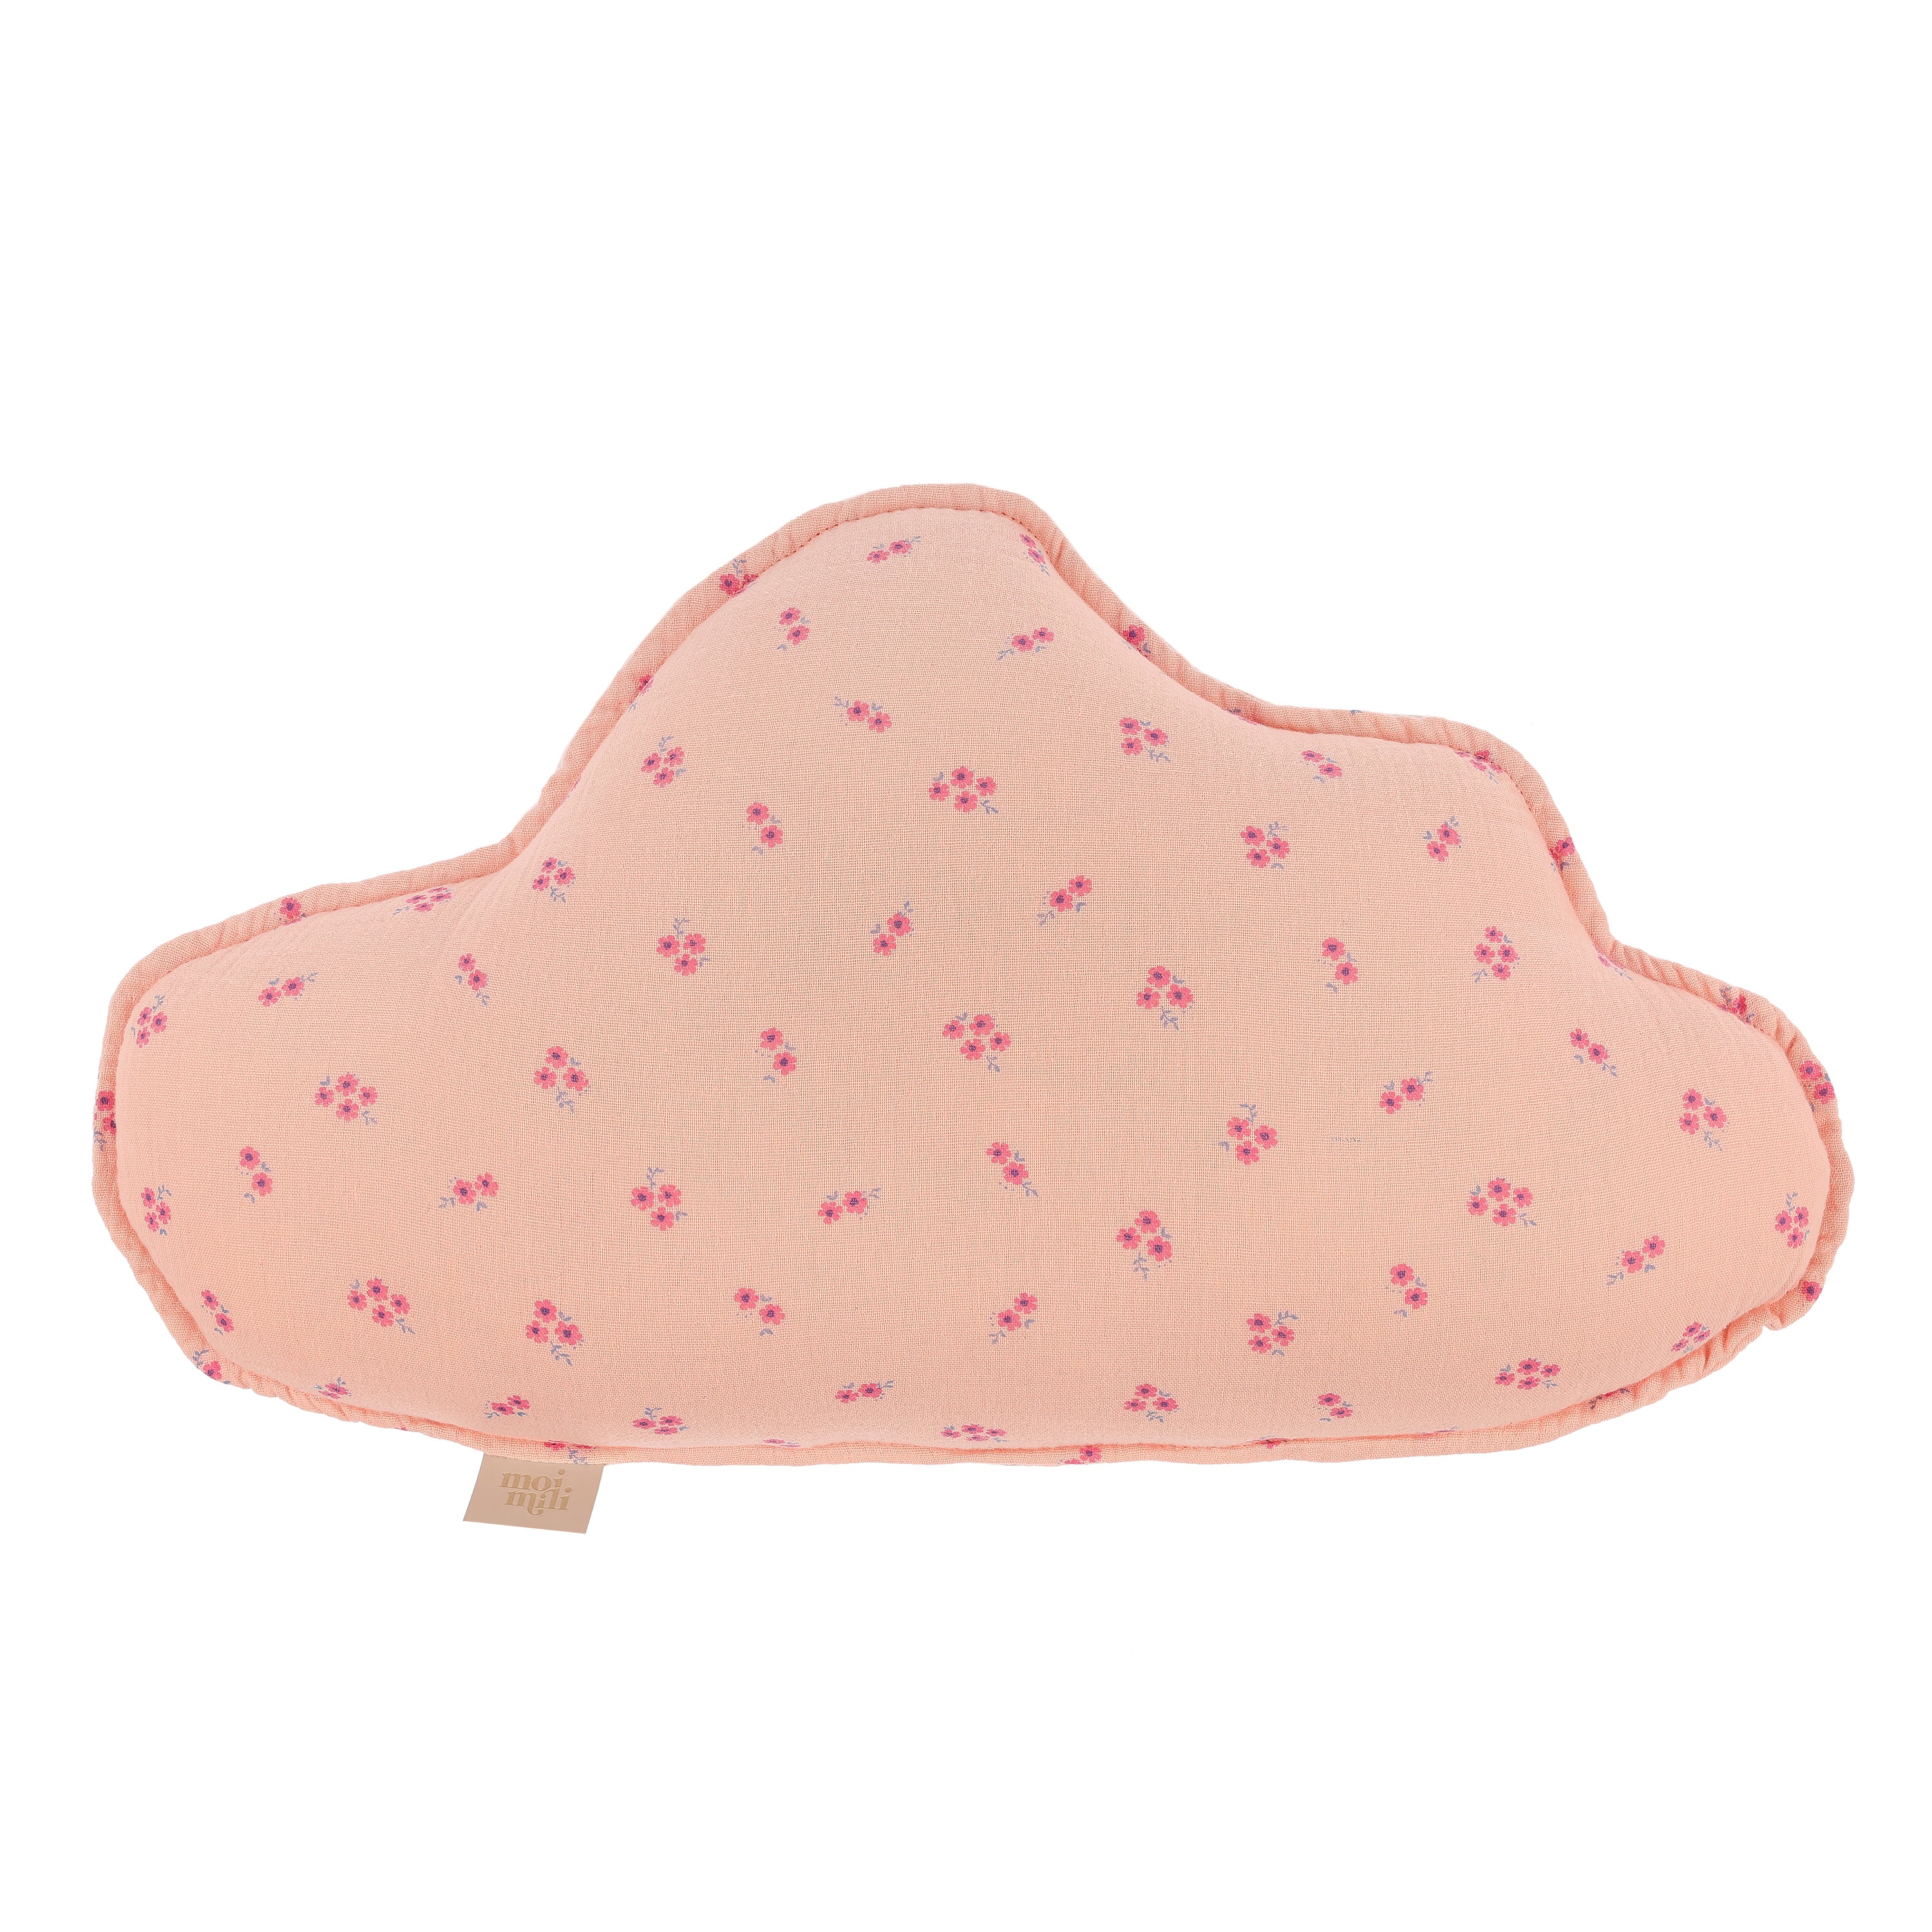 moimili Moi Mili Vergissmeinnicht-Wolken-Kissen aus Musselin